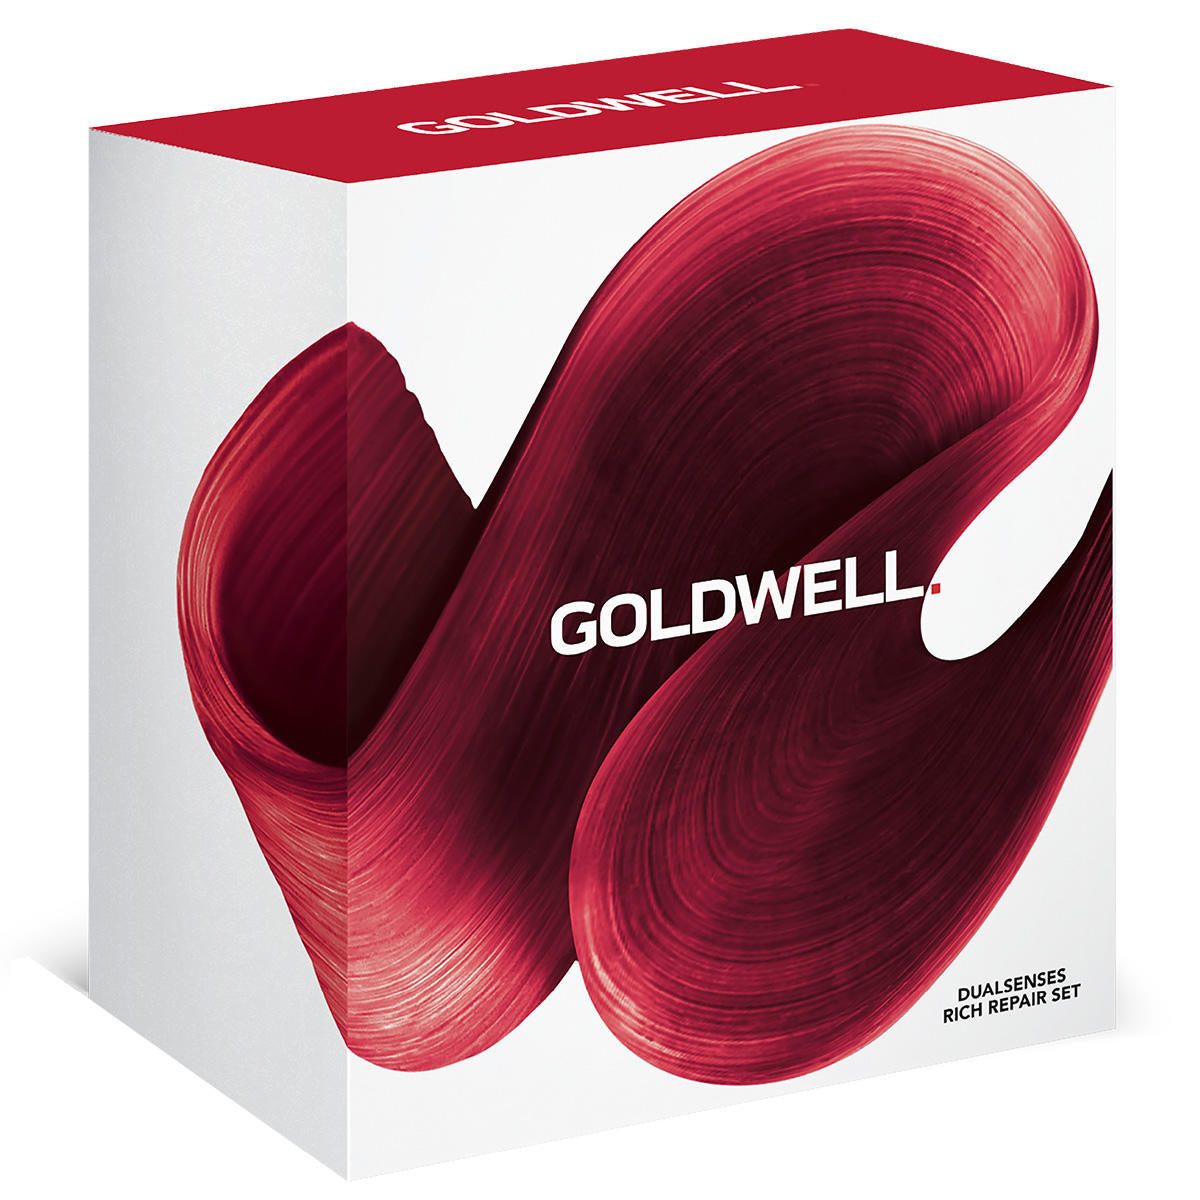 Goldwell Dualsenses Rich Repair Set regalo  - 1